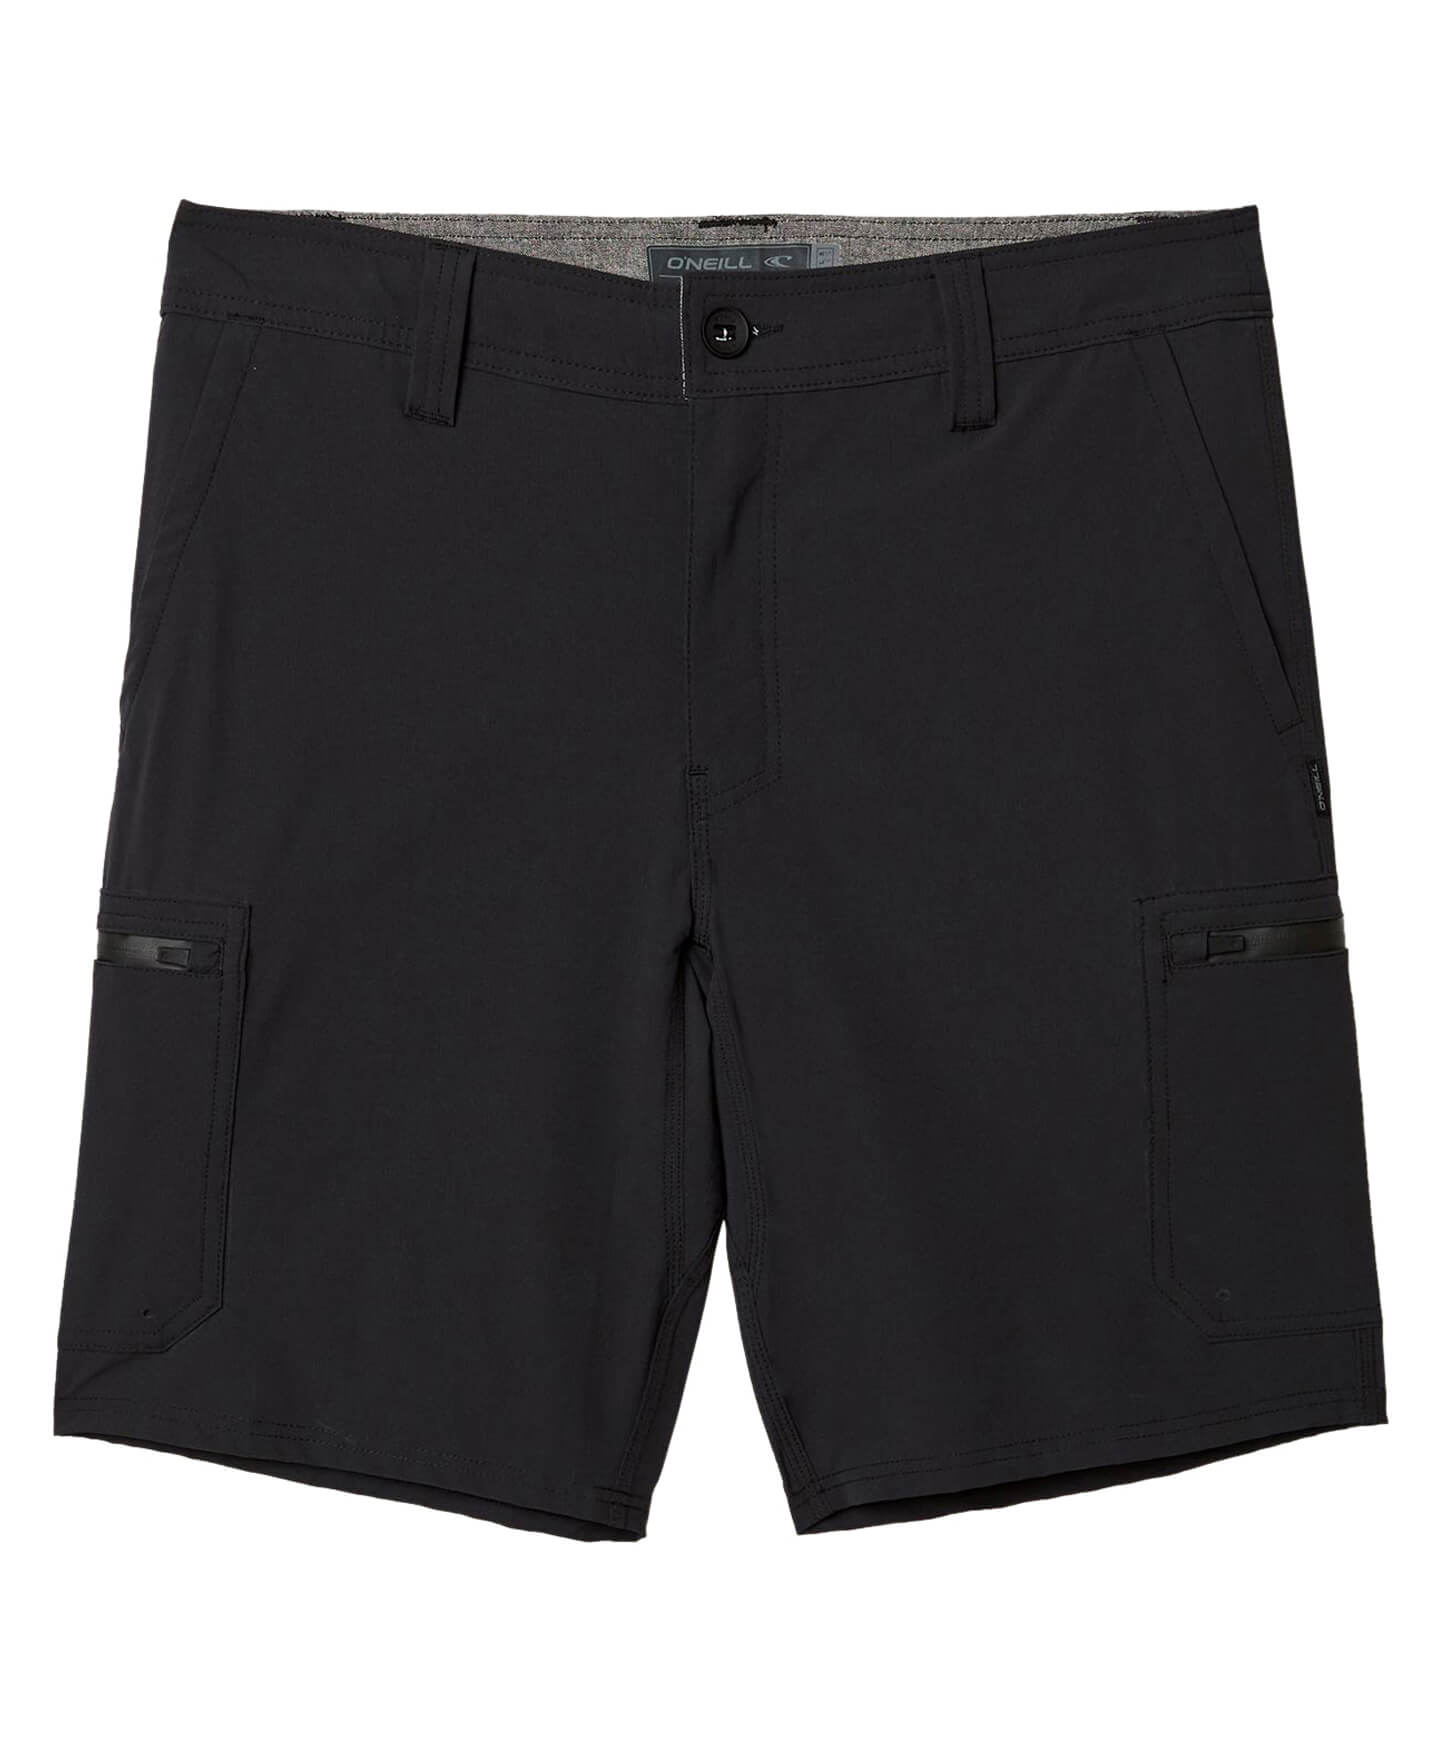 TRVLR Cargo Shorts - Black